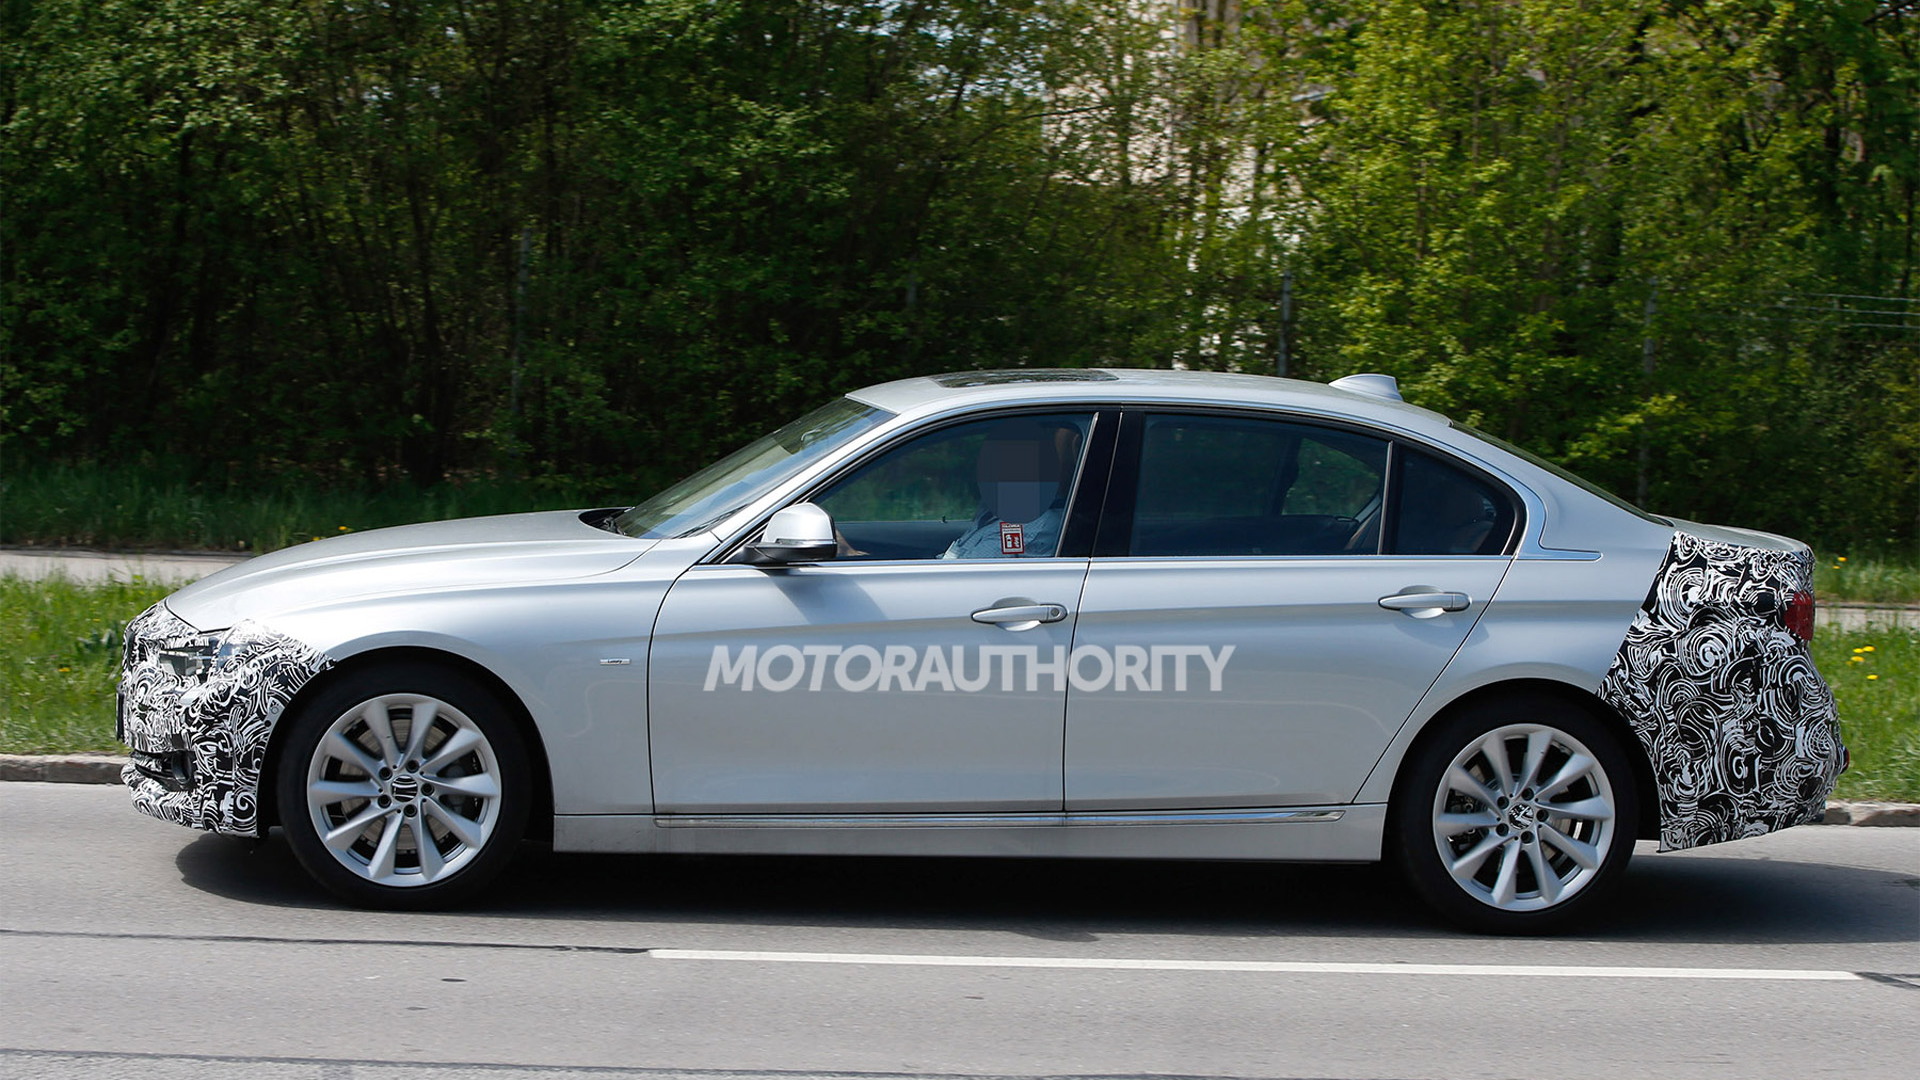 2016 BMW 3-Series long-wheelbase model facelift spy shots - Image via S. Baldauf/SB-Medien